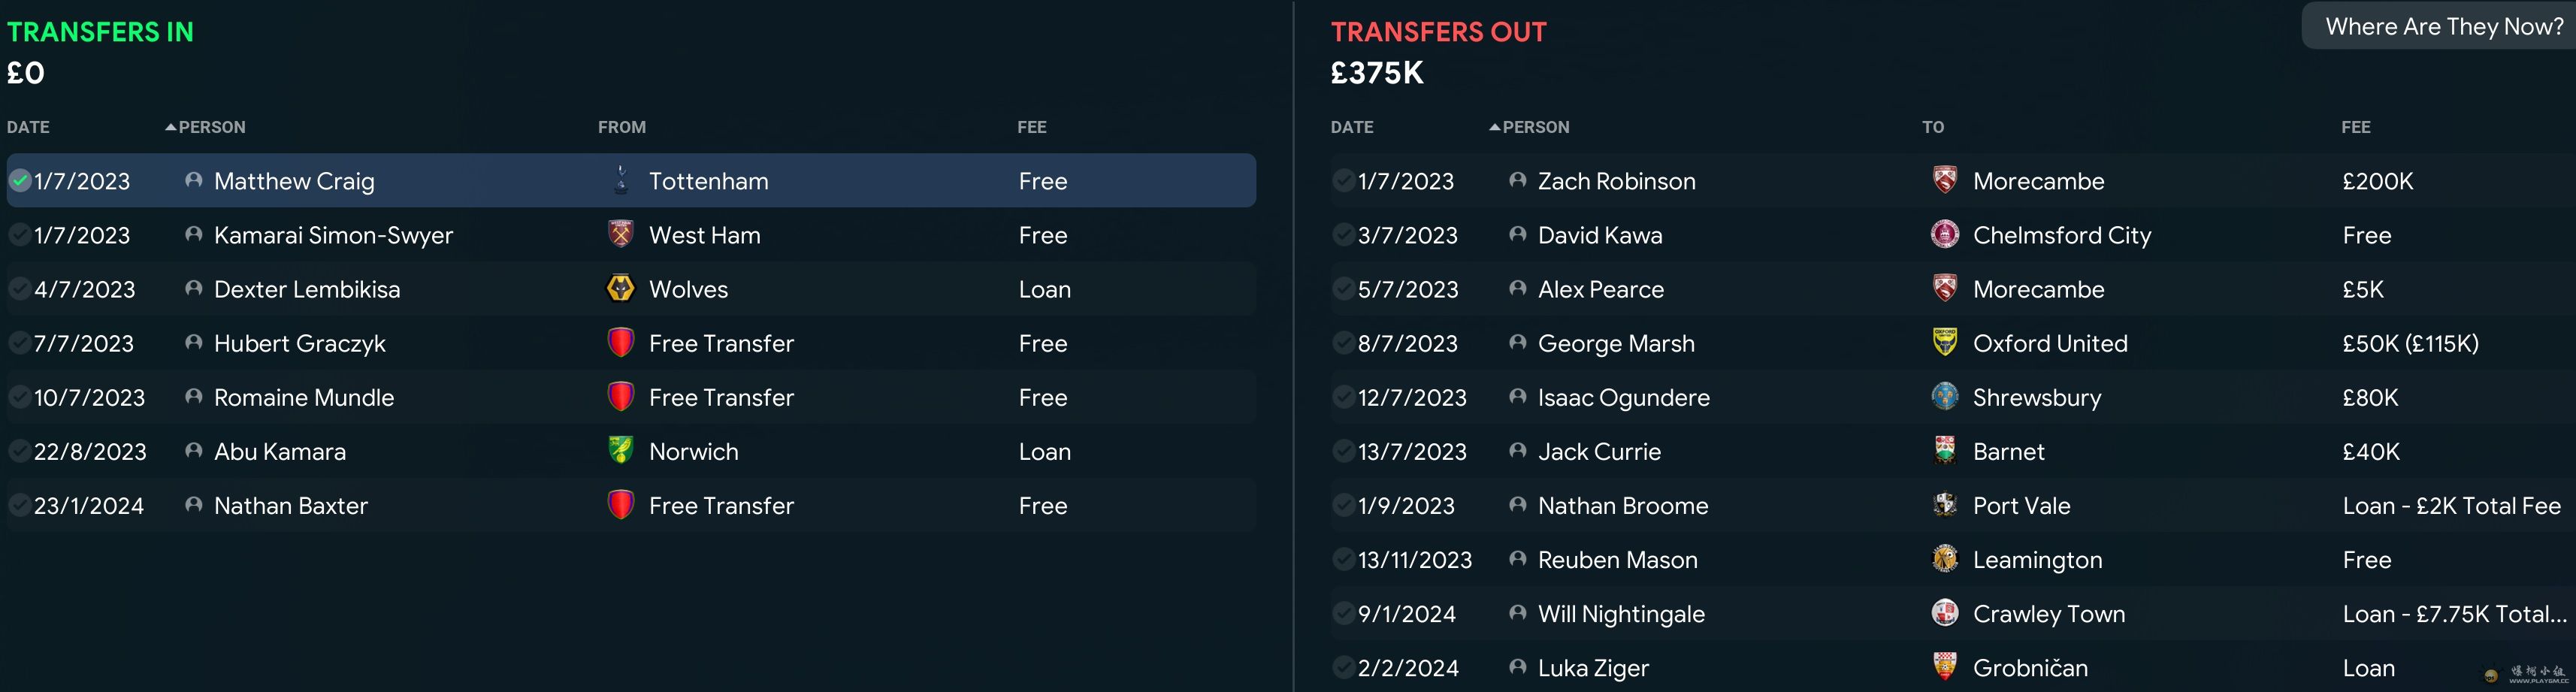 transfers.jpg